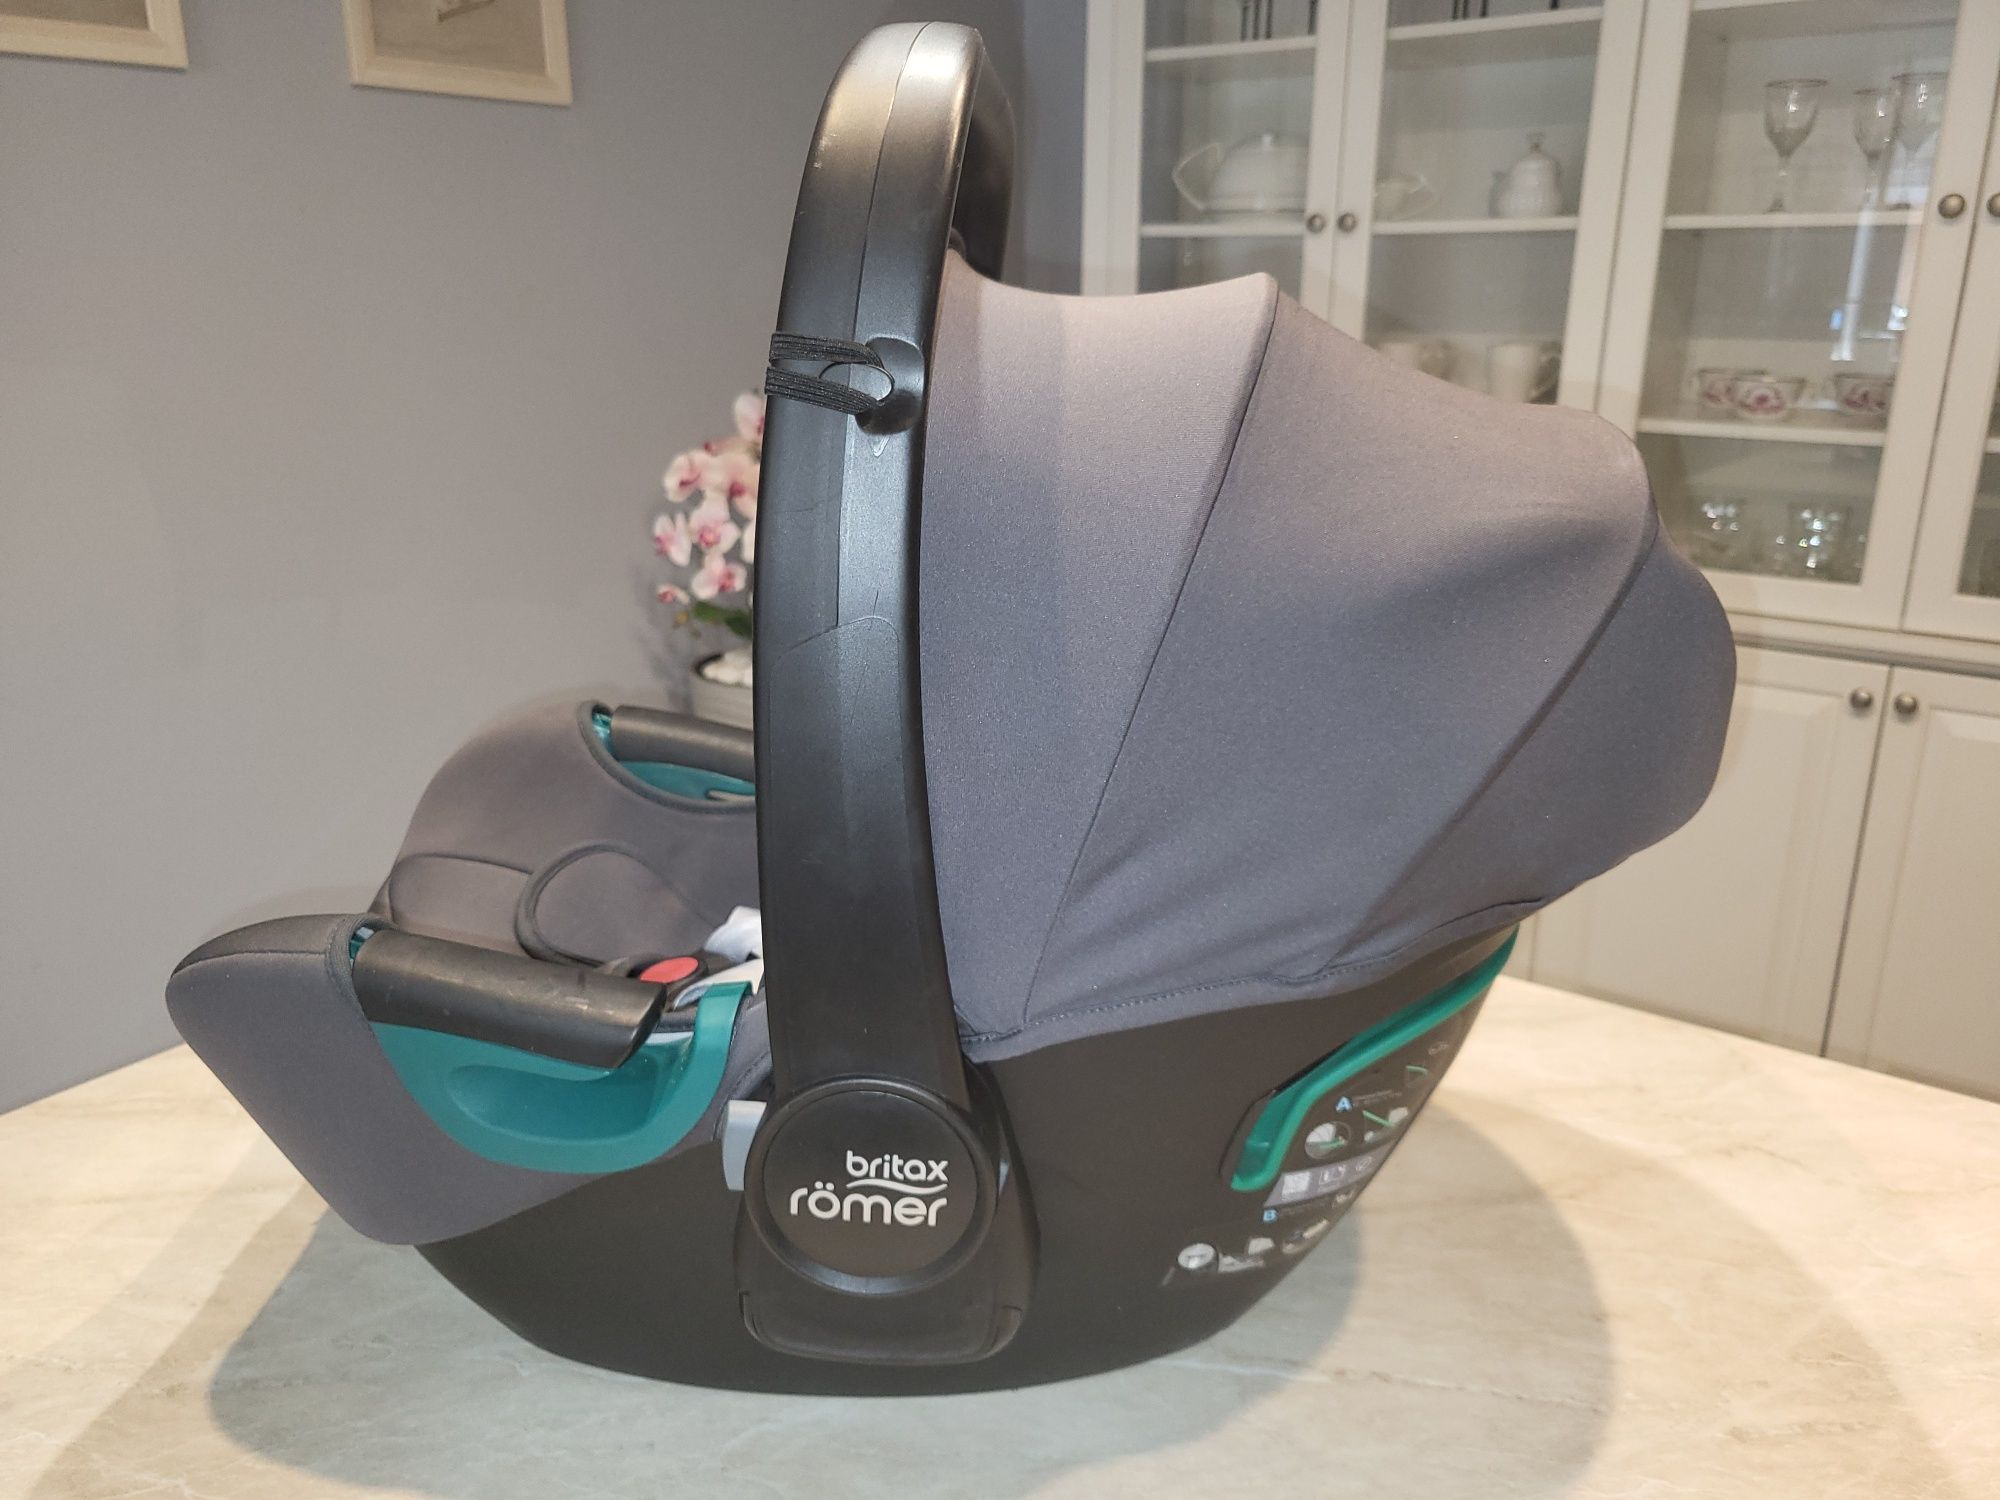 Fotelik britax rőmer Baby-Safe 3 i-Size + karuzela i nosidełko Kutnik